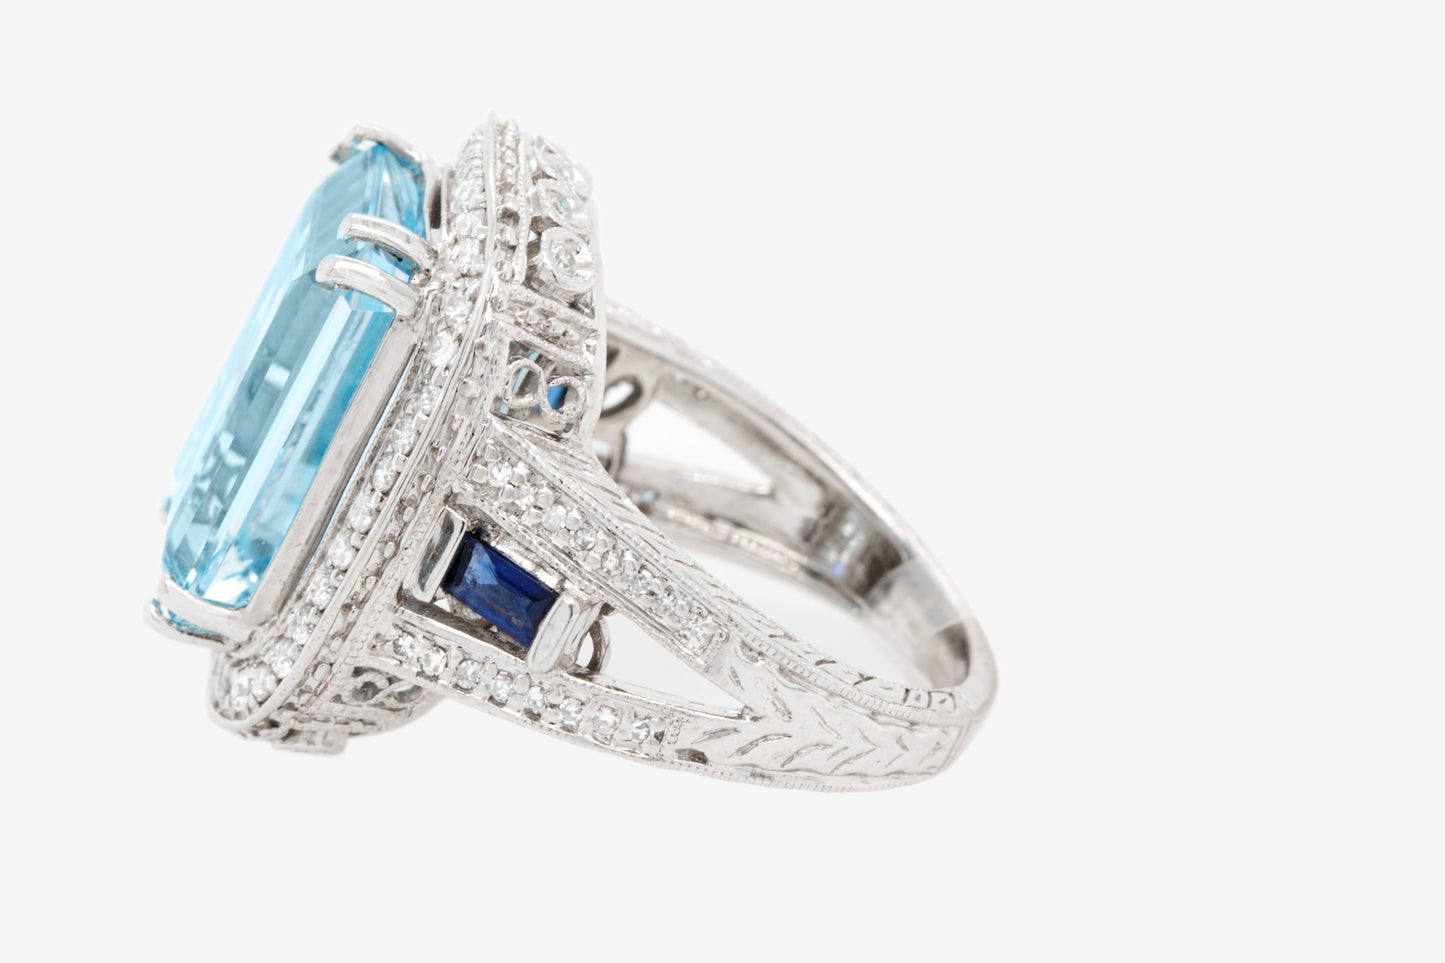 Aquamarine Ring 18 Carat With Diamonds and Sapphires 18K Gold